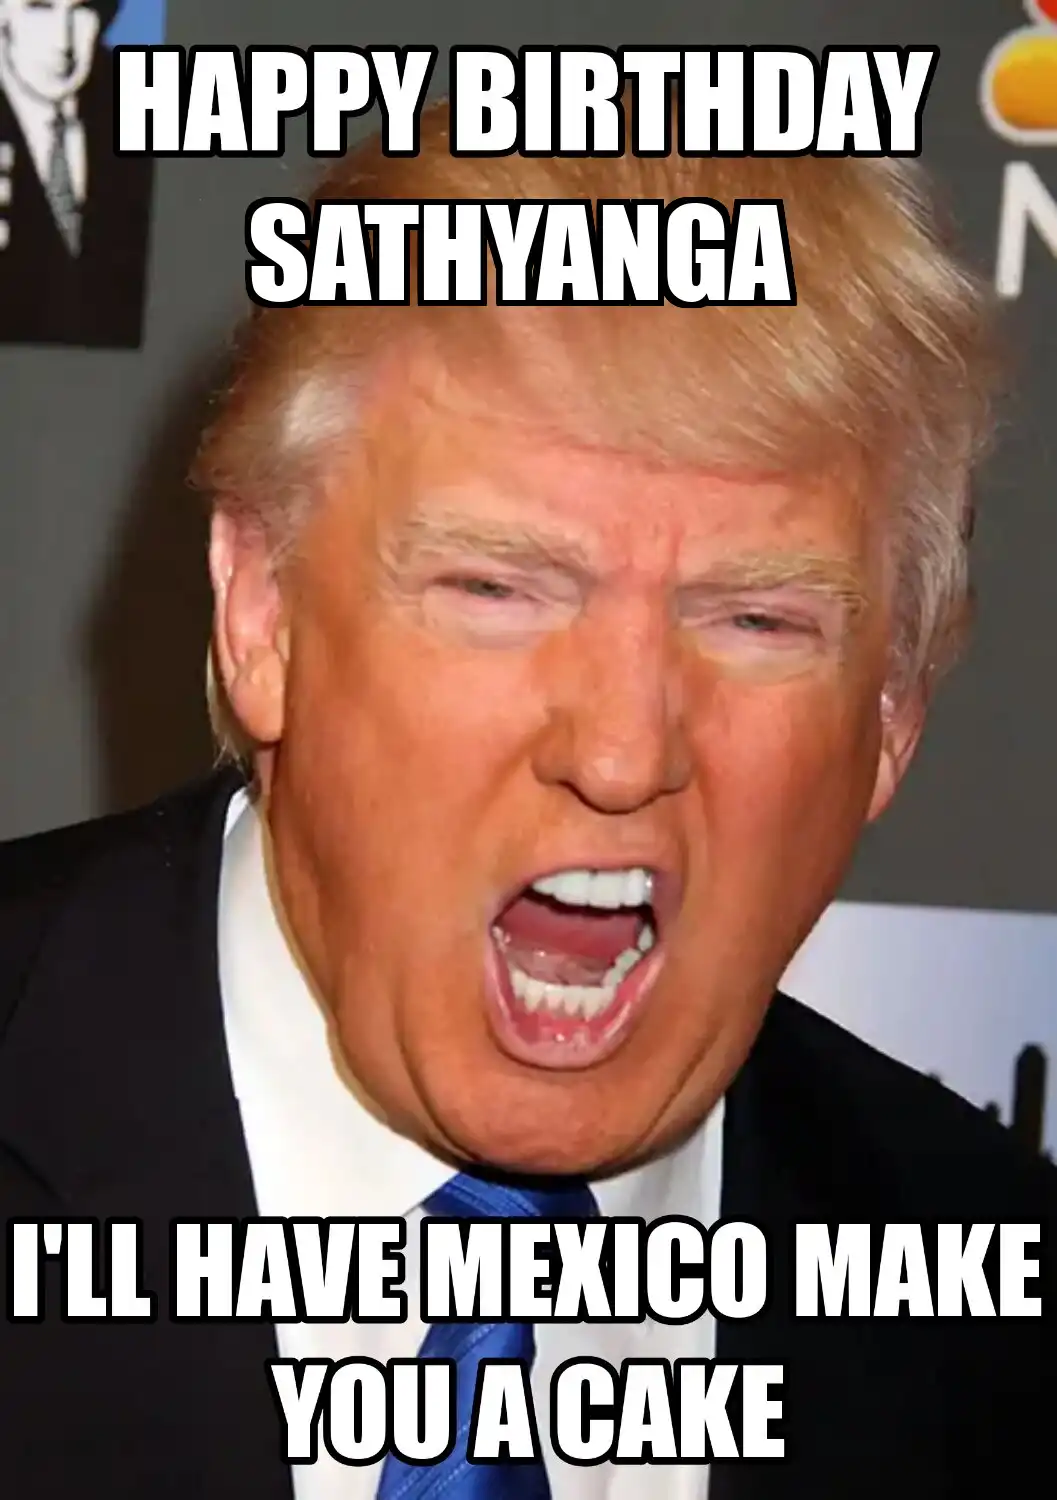 Happy Birthday Sathyanga Mexico Make You A Cake Meme